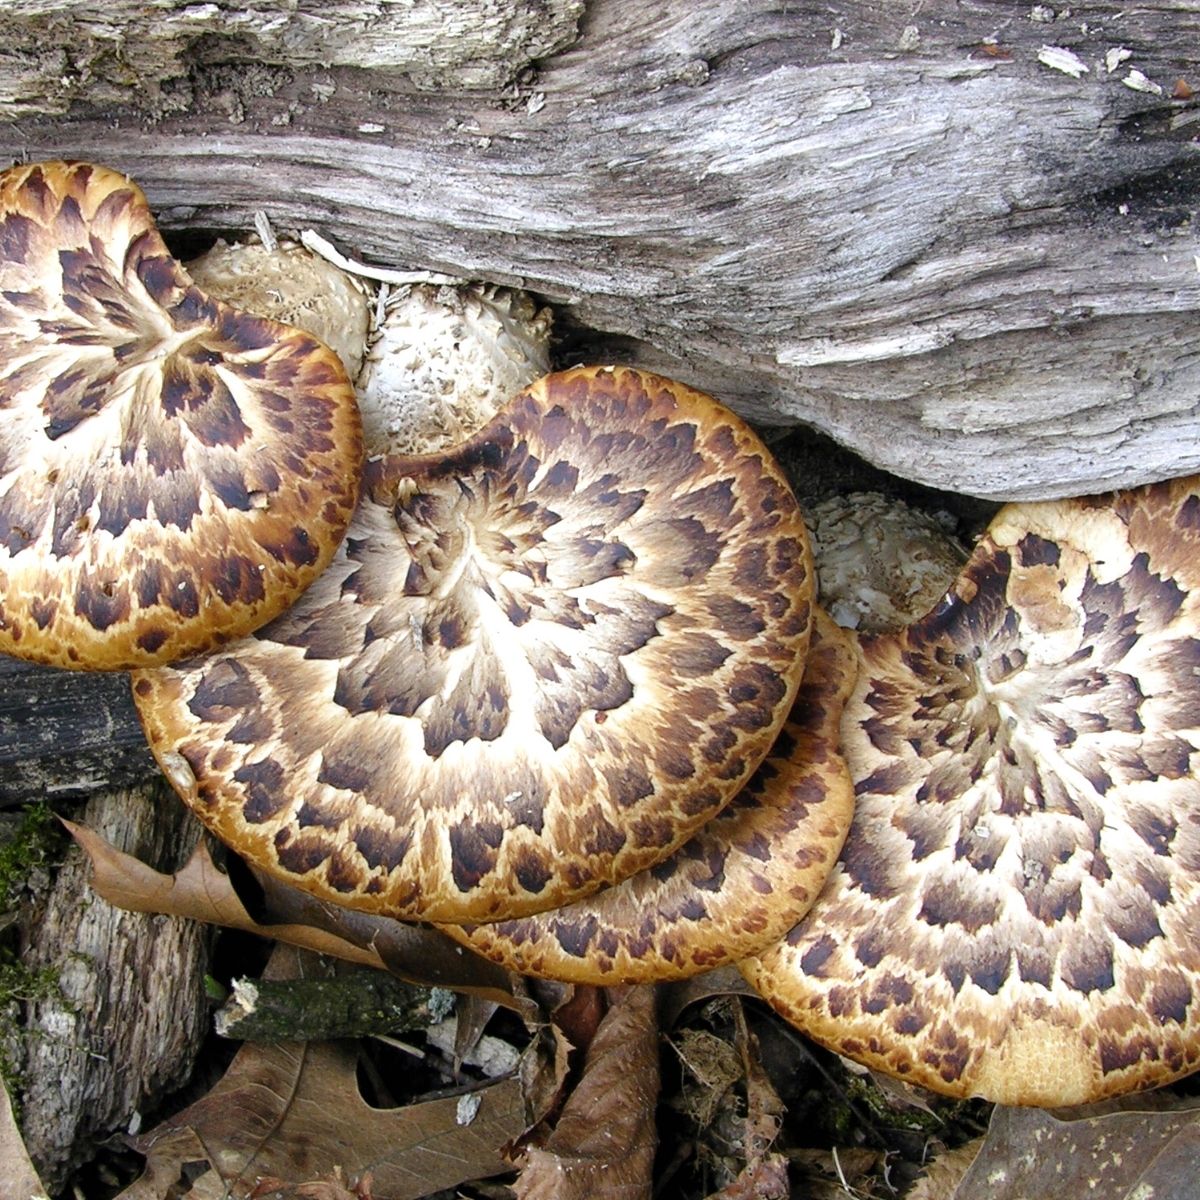 dryads saddle mushroom